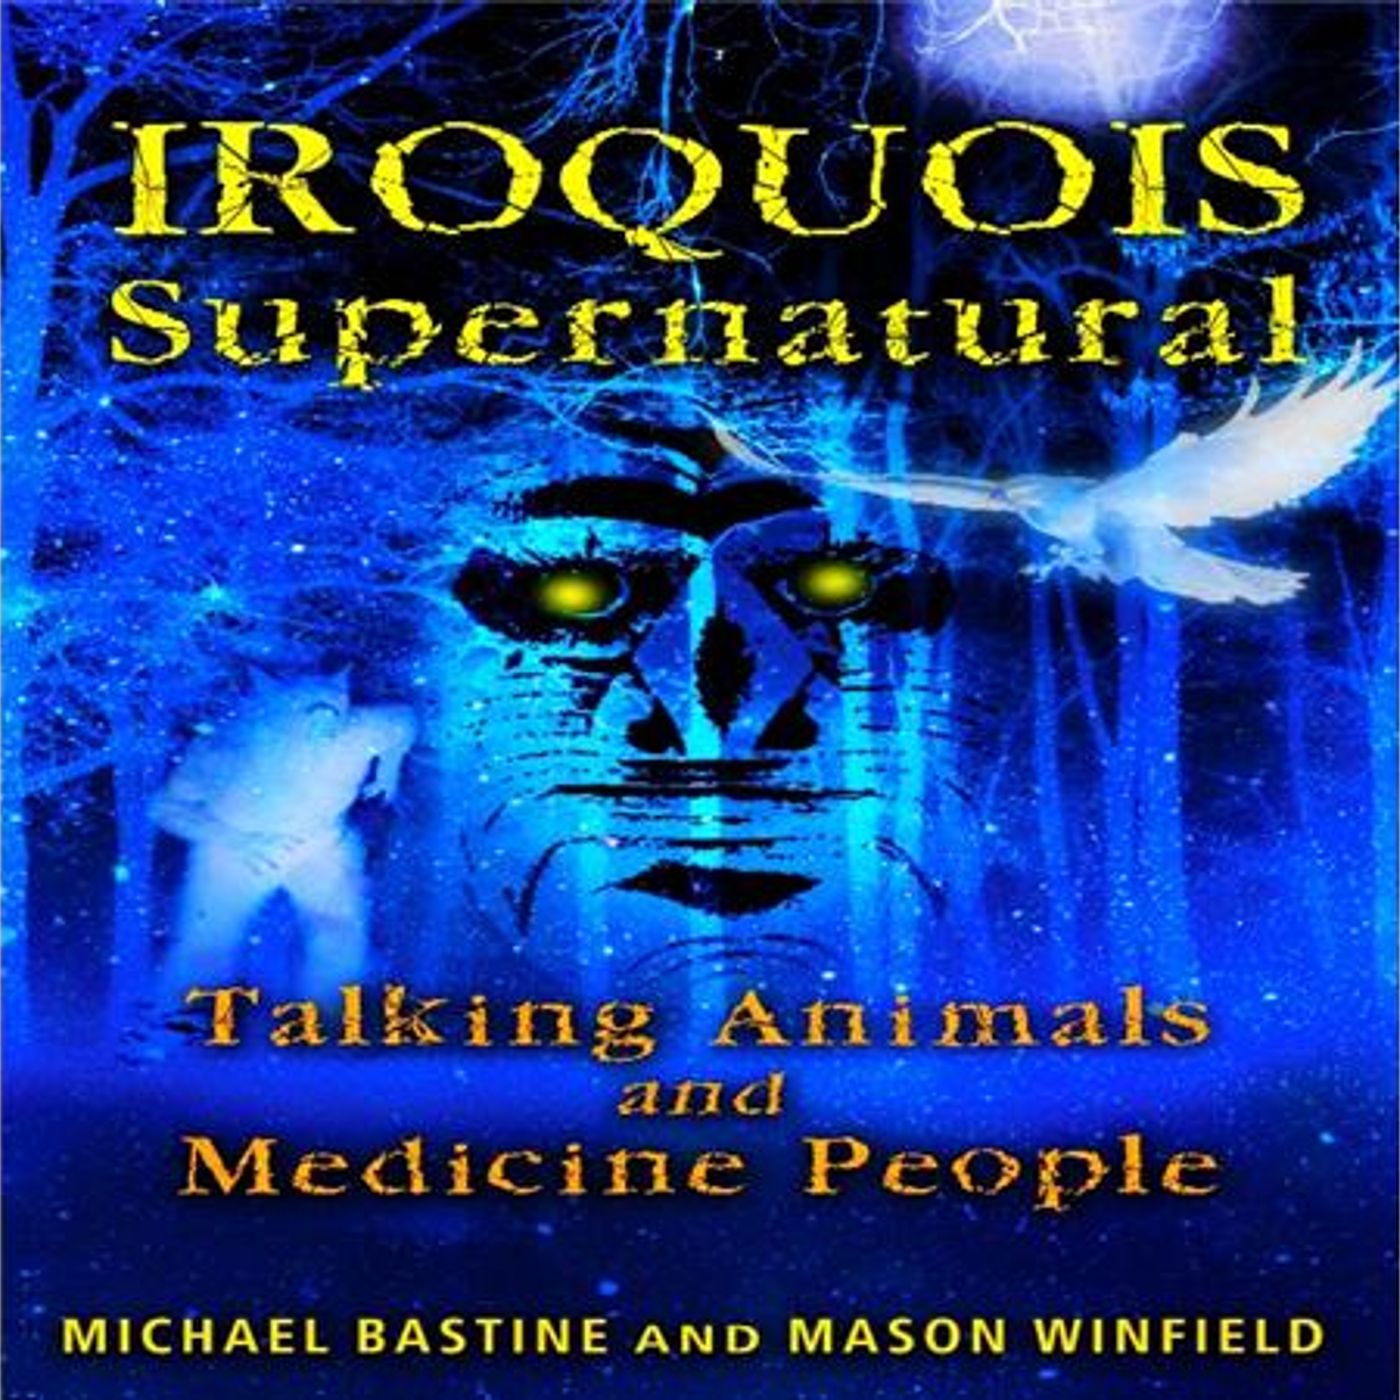 Iroquois Supernatural: shapeshifting, vampires and zombies